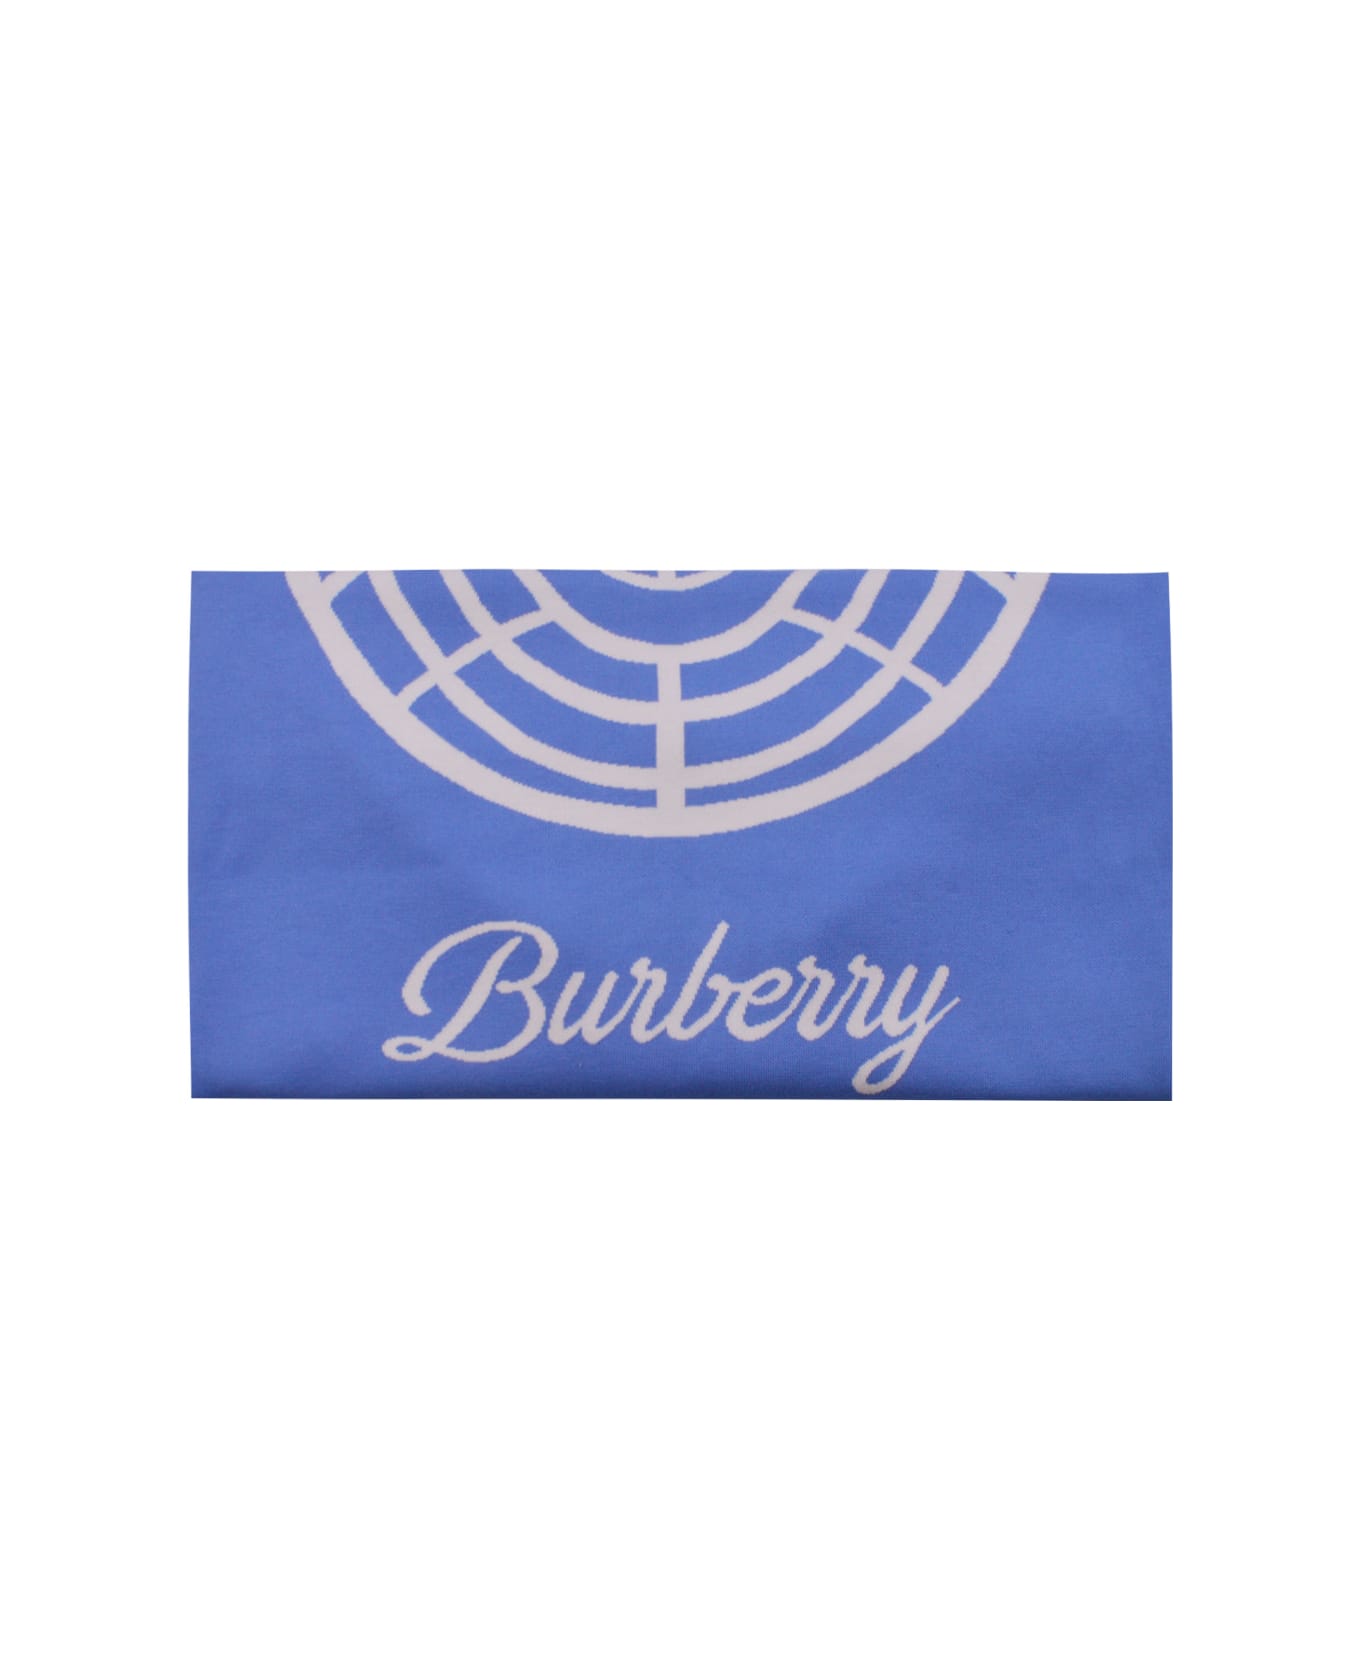 Burberry Blanket With Thomas Bear - Blue